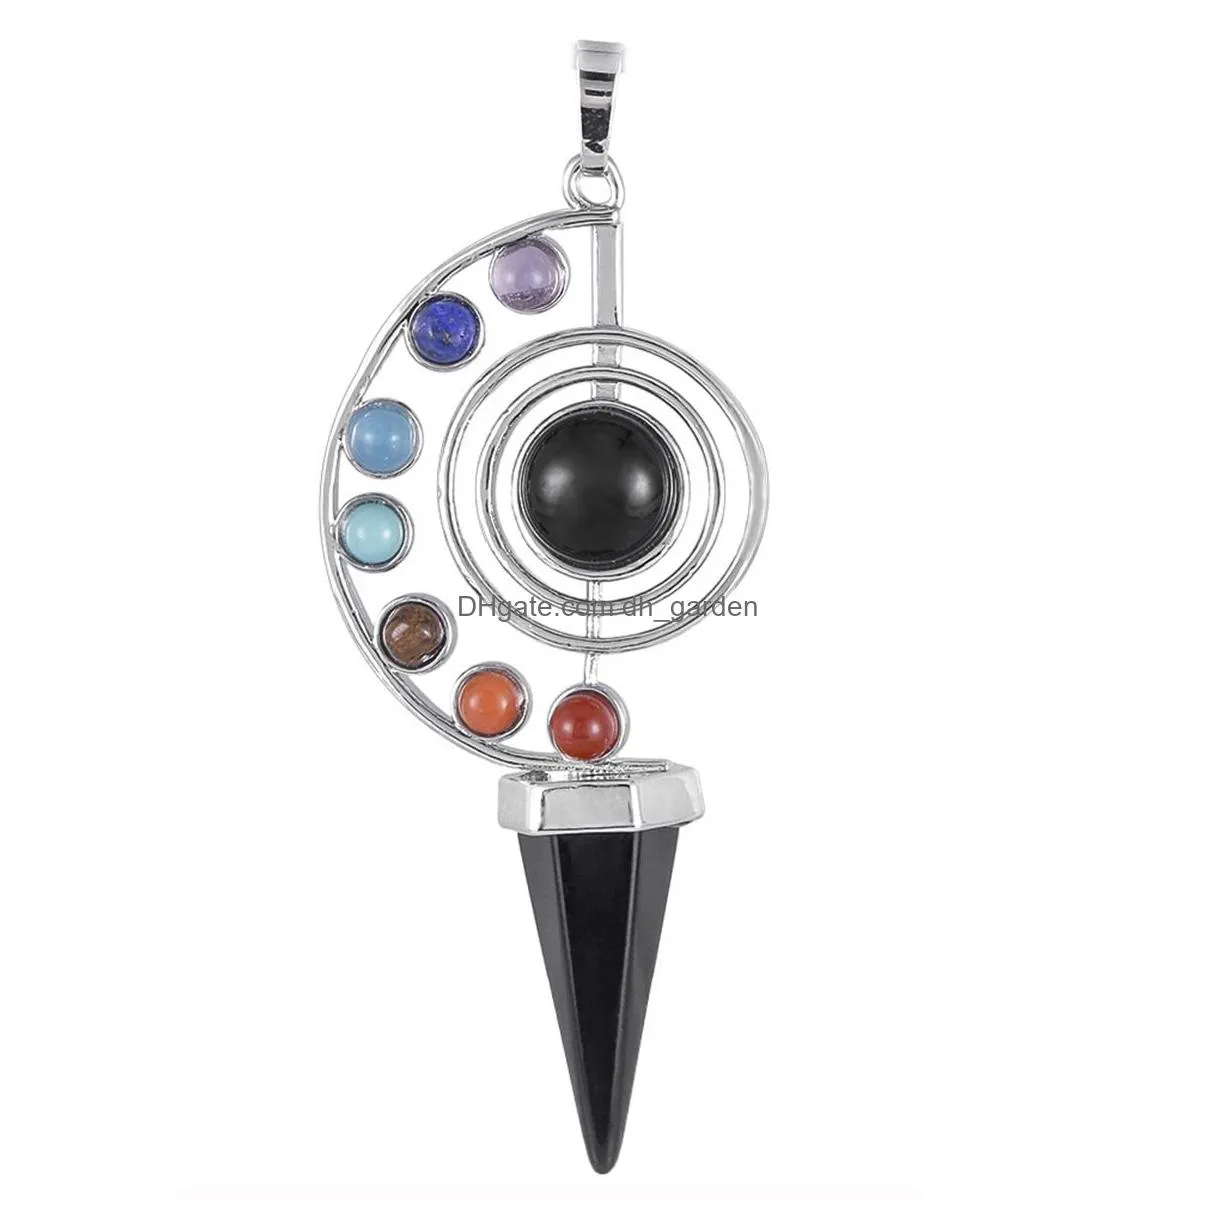 natural stone pendulum crystal yoga 7 chakra spiral hexagonal cone pendant amethyst reiki healing pendulum jewelry